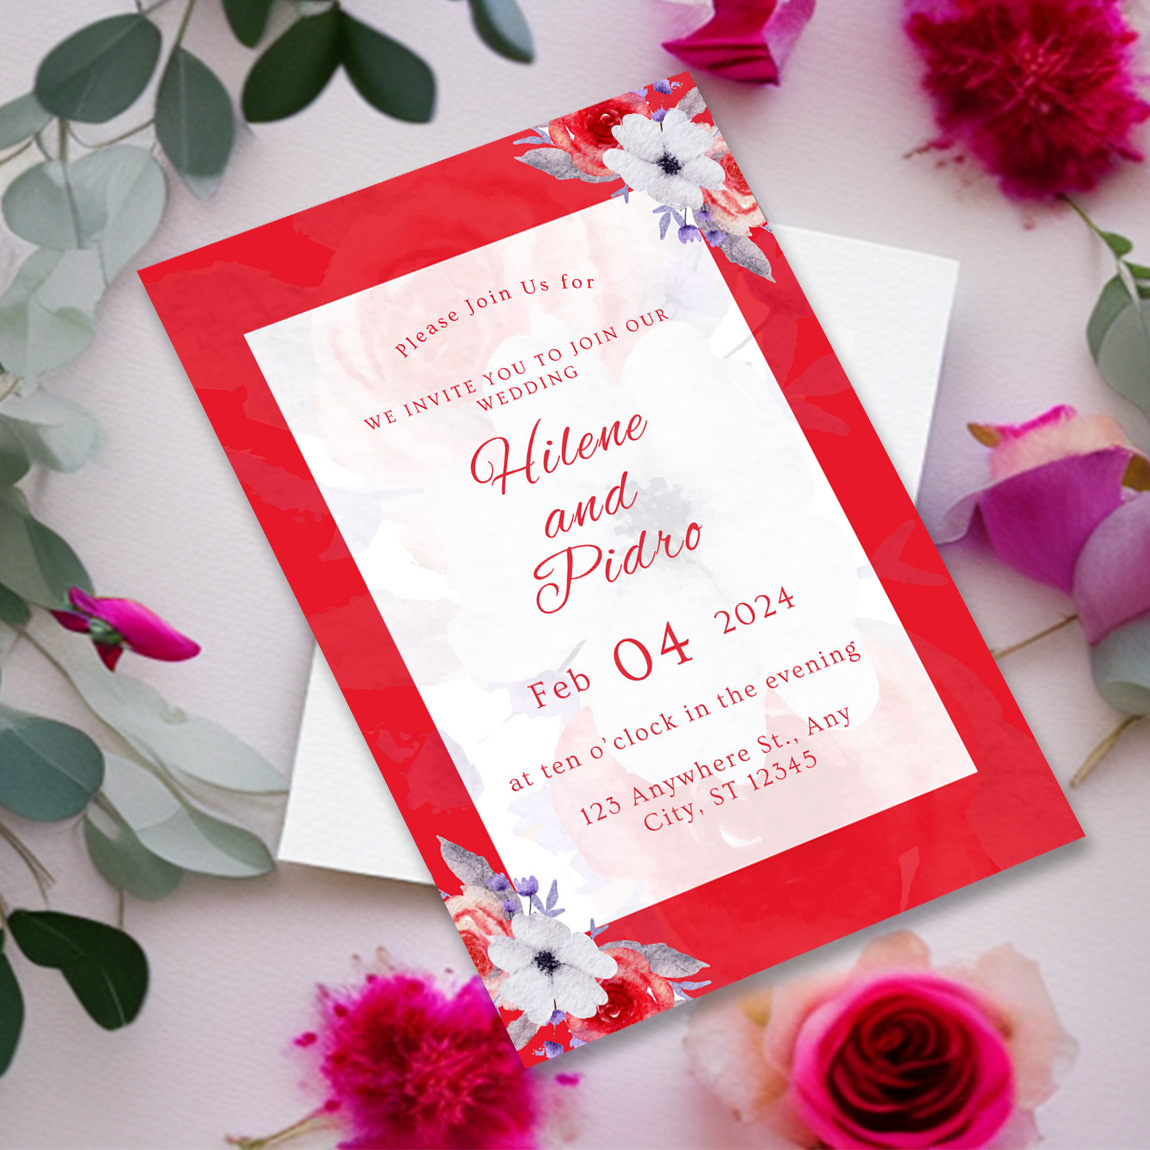 Image with wonderful wedding invitation with flowers.